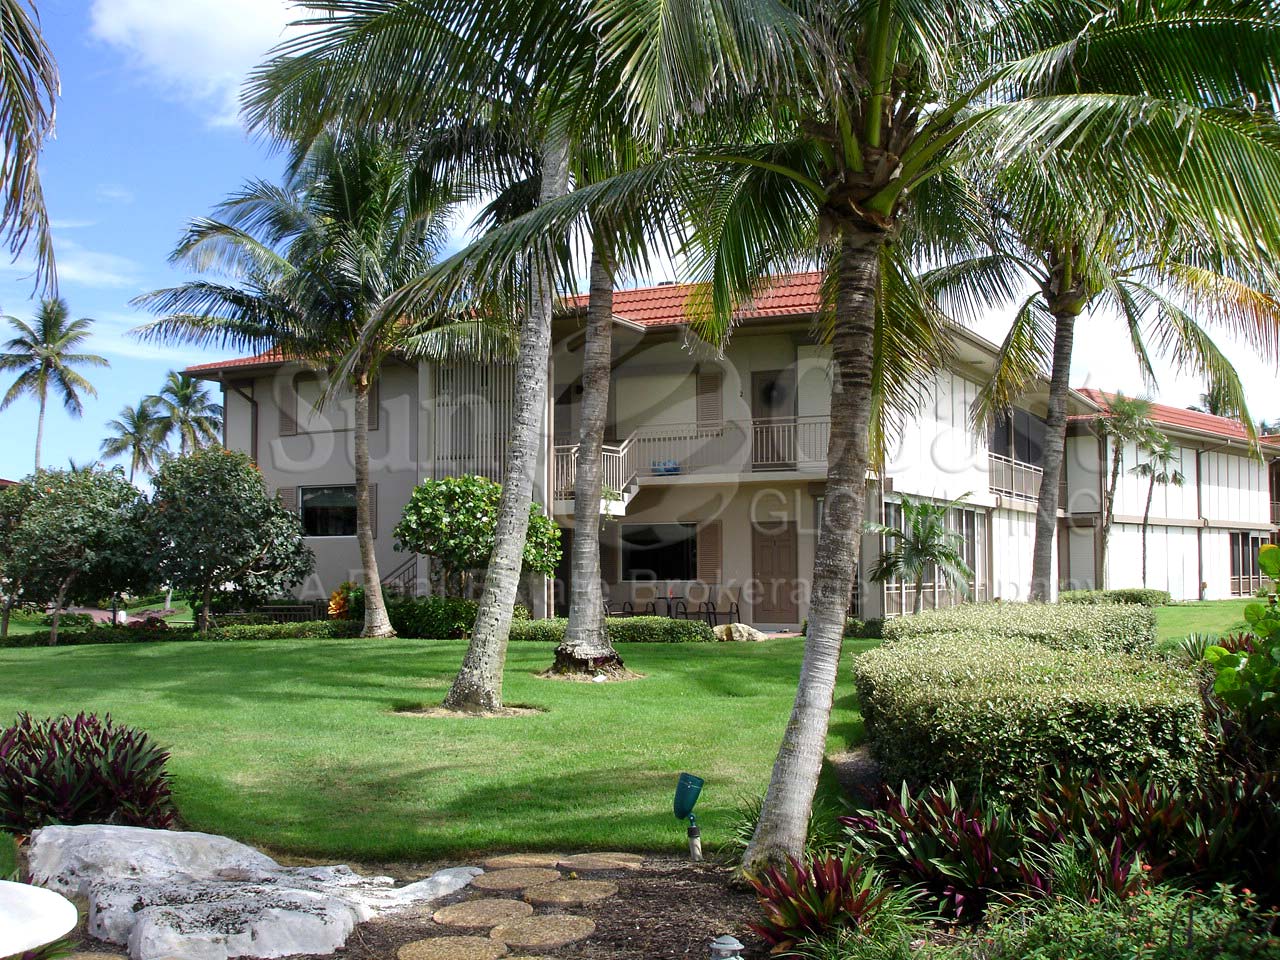 Indies West Exterior View of the Condominiums